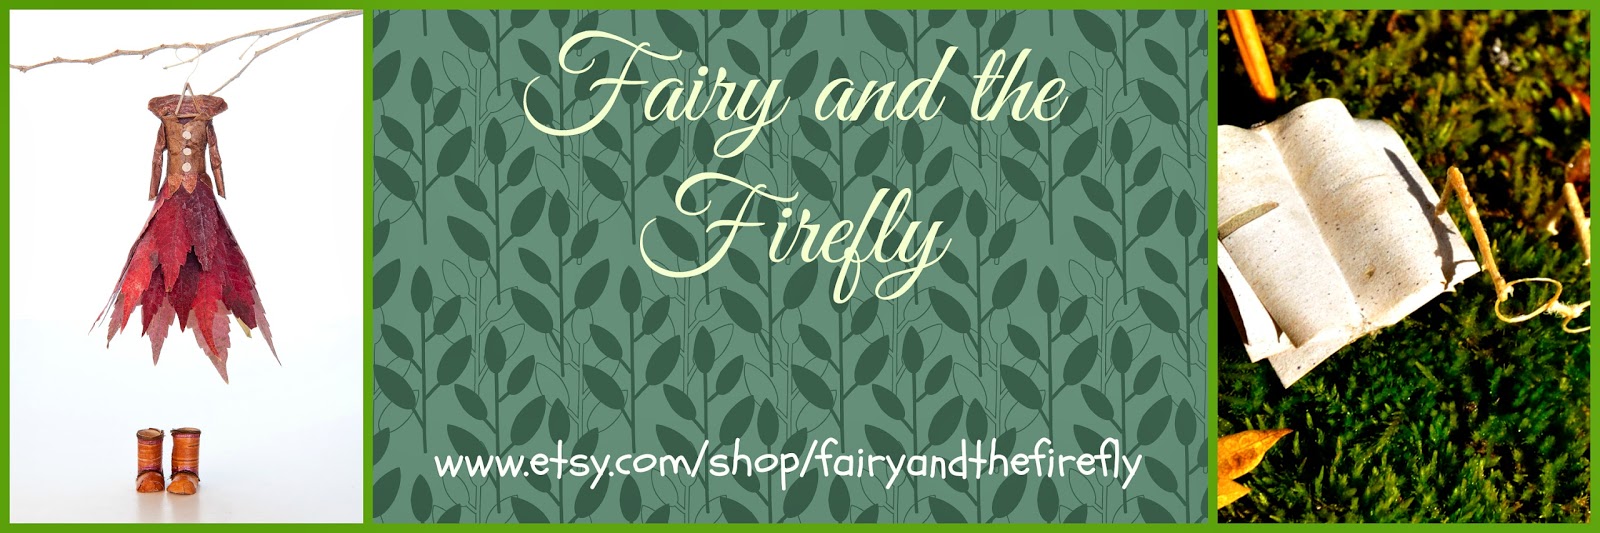 CraftyGirl's Feature Shop: FairyandtheFirefly